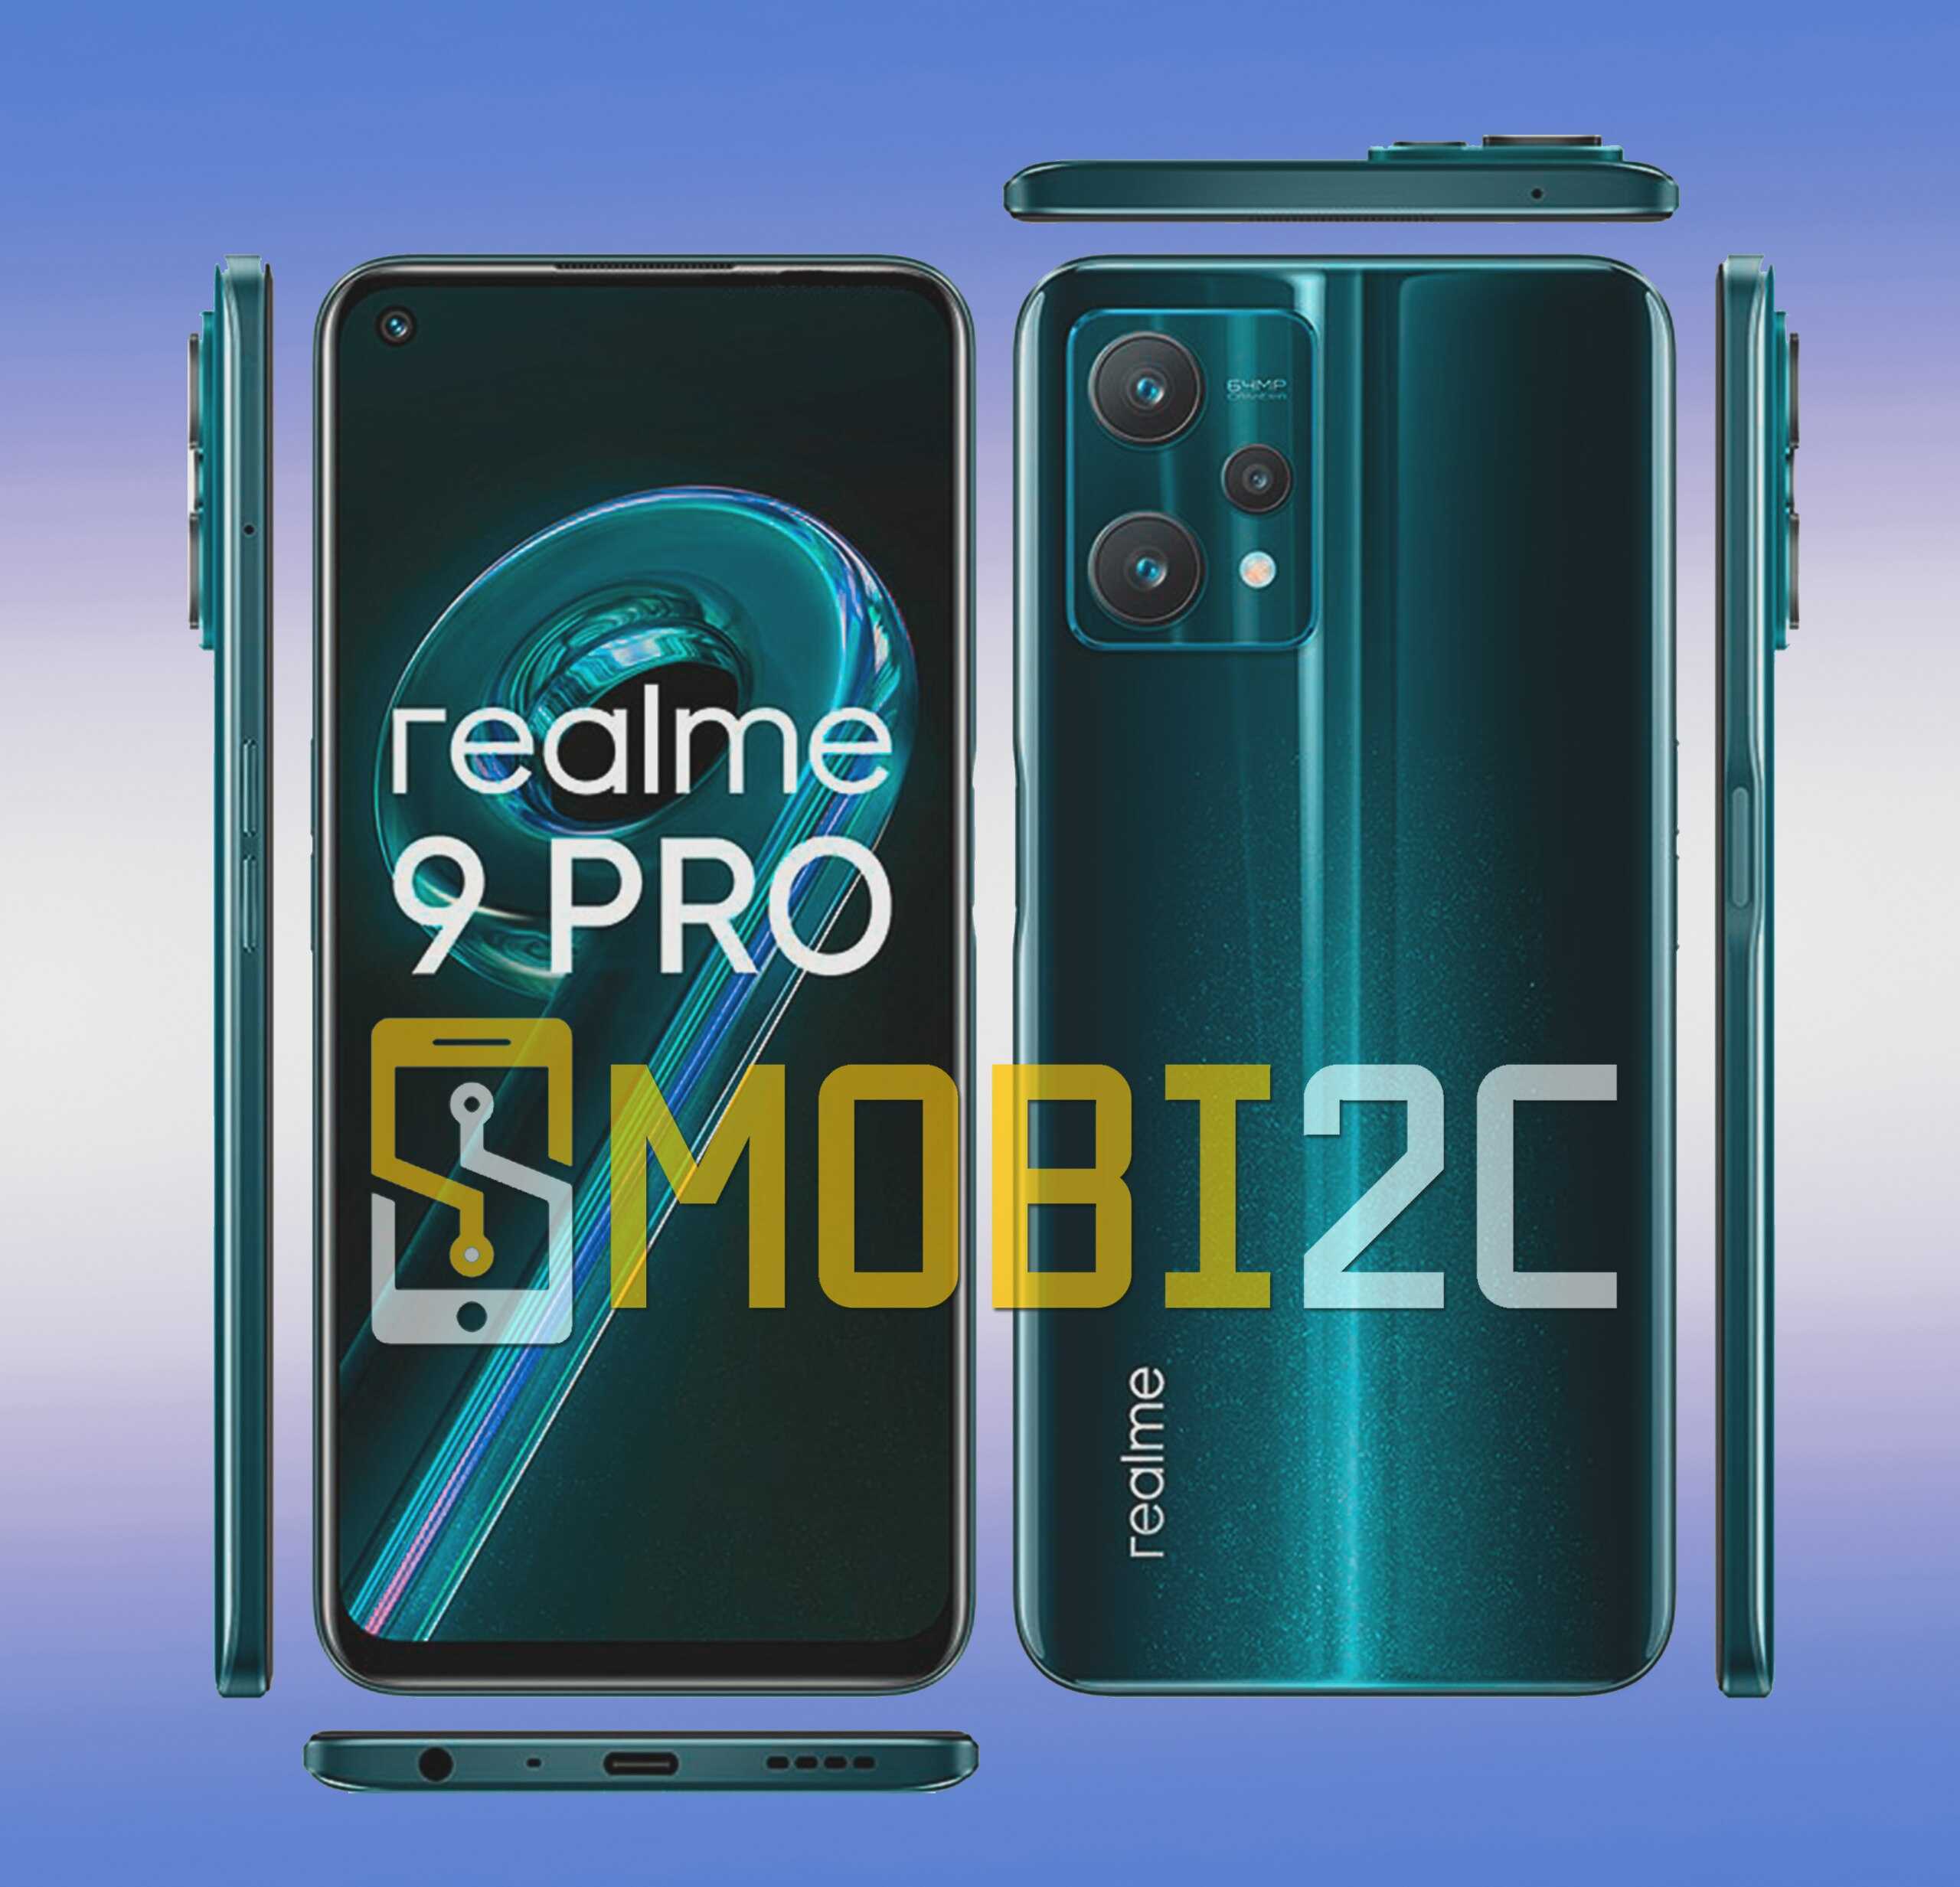 Realme 9 Pro Phone Review